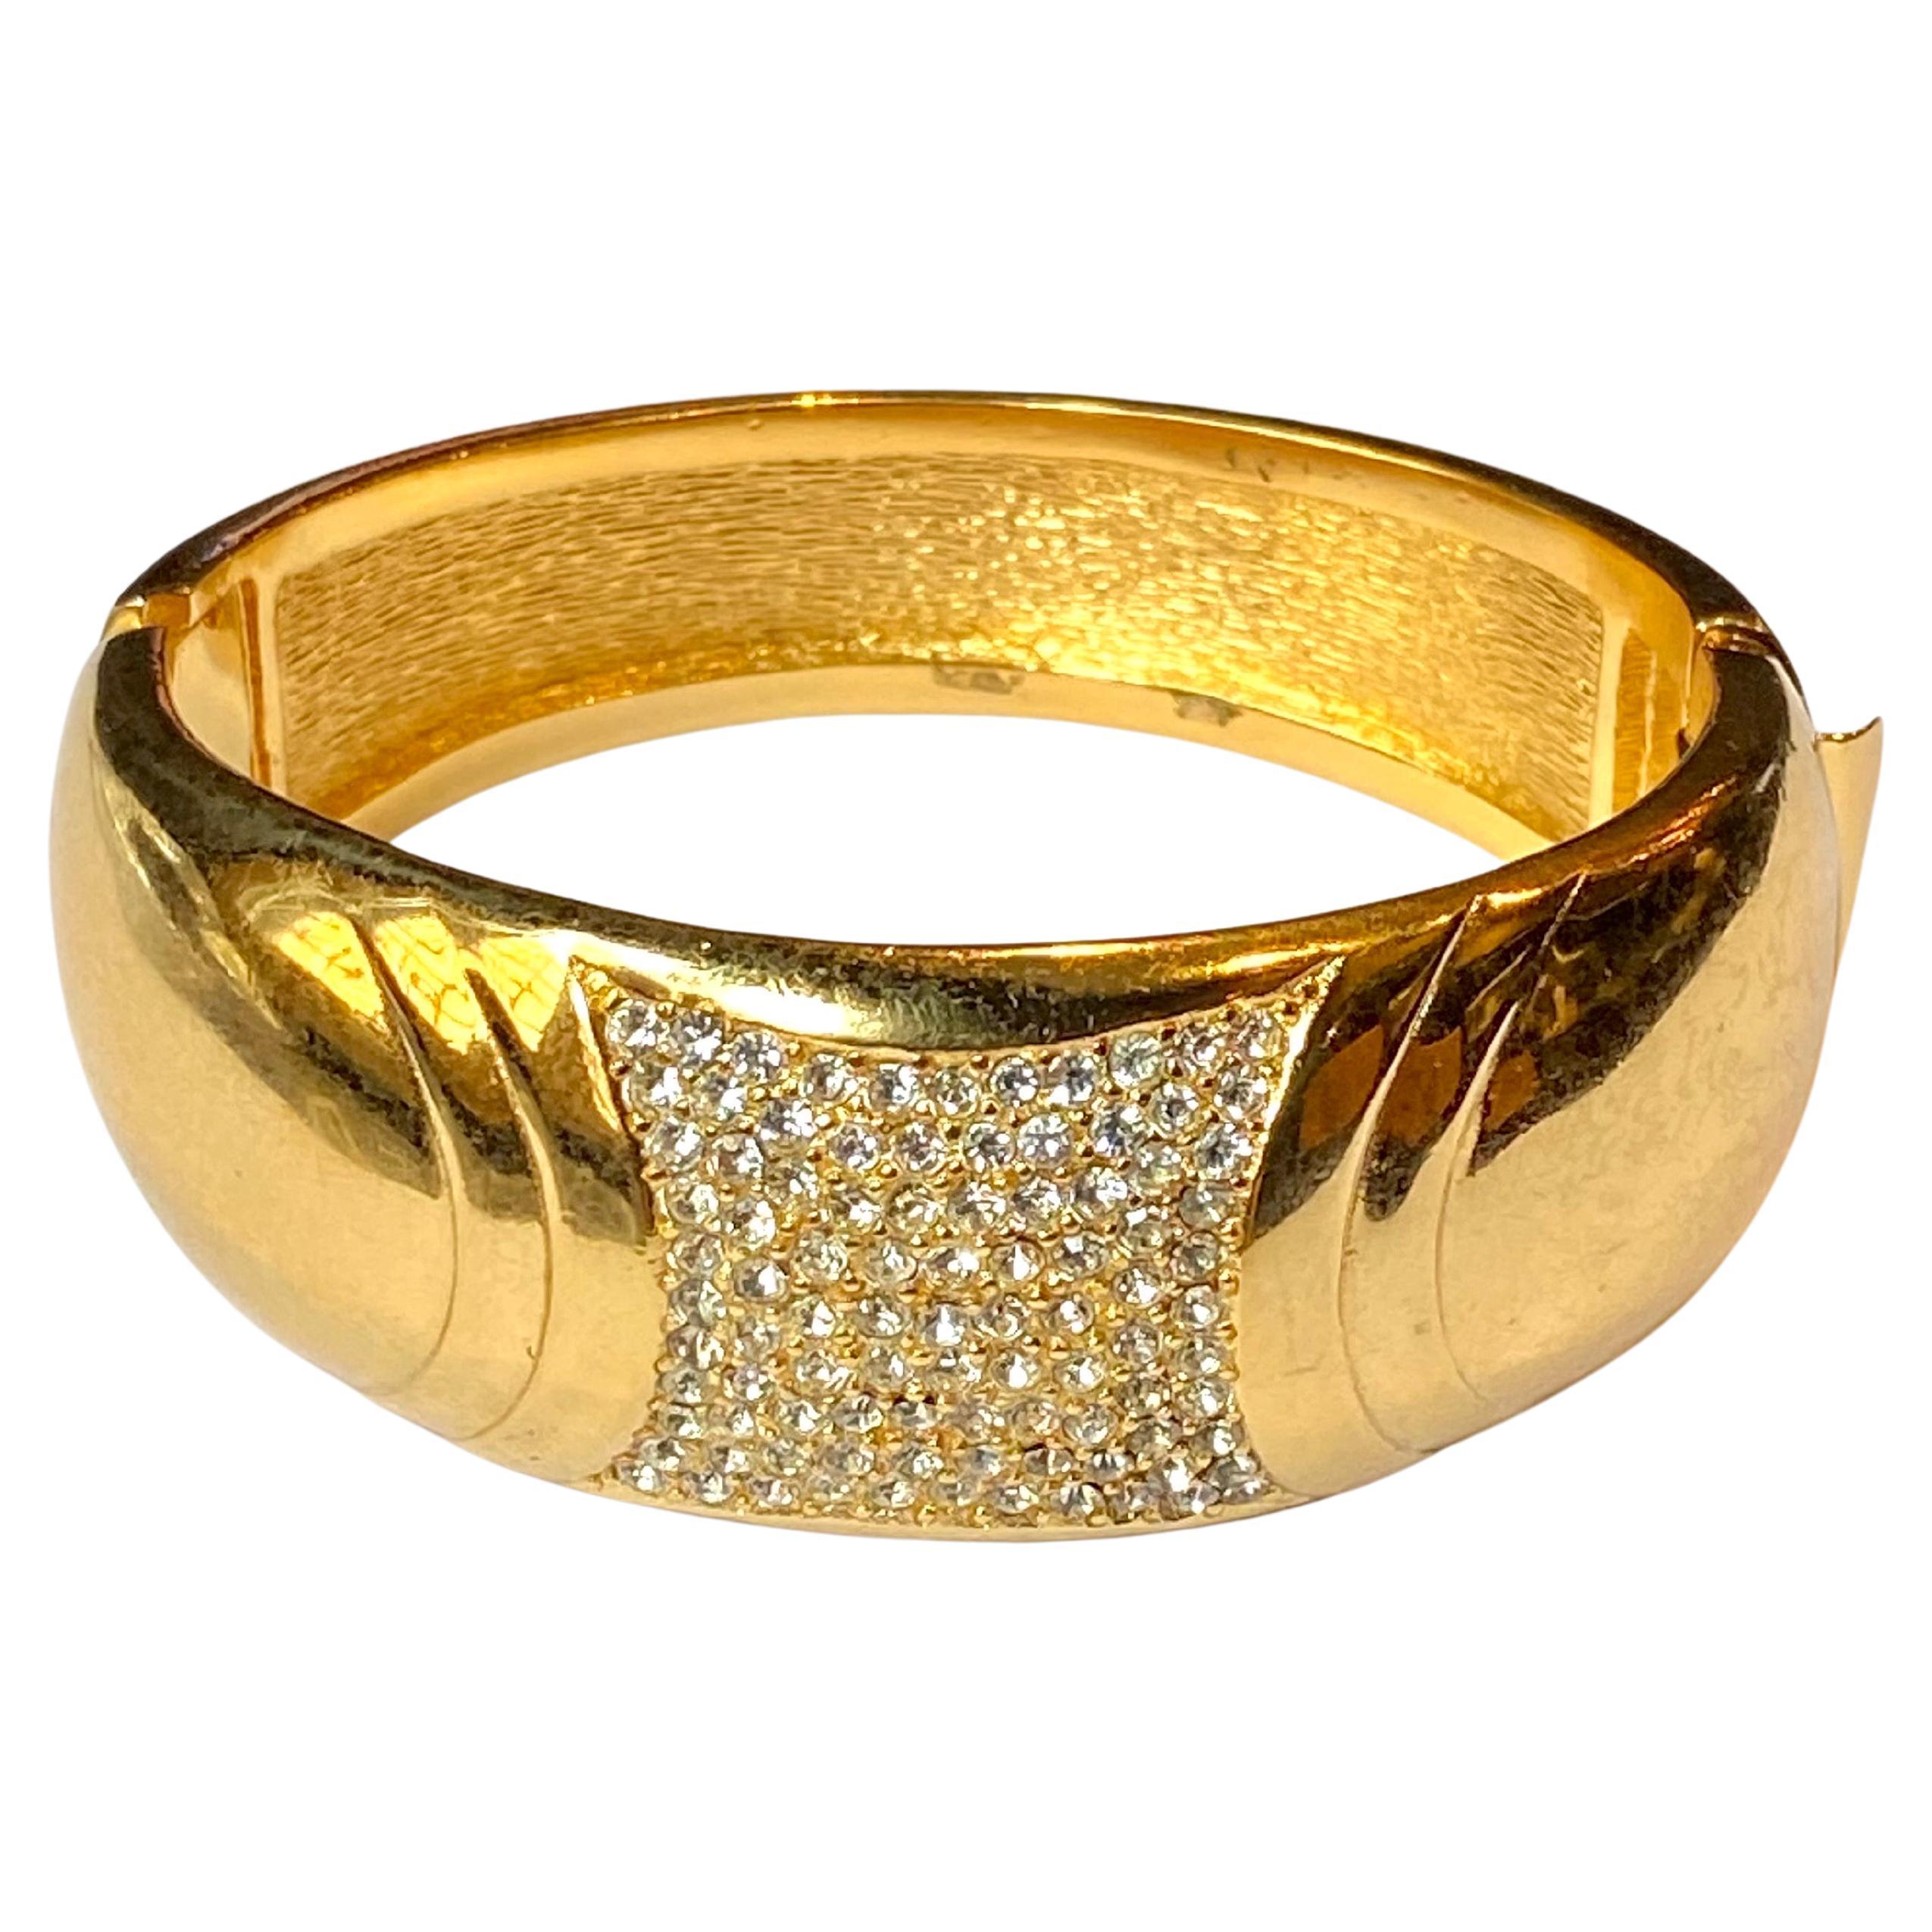 Christian Dior 1980s Gold with Rhinestone Art Deco Style Bangle Bracelet